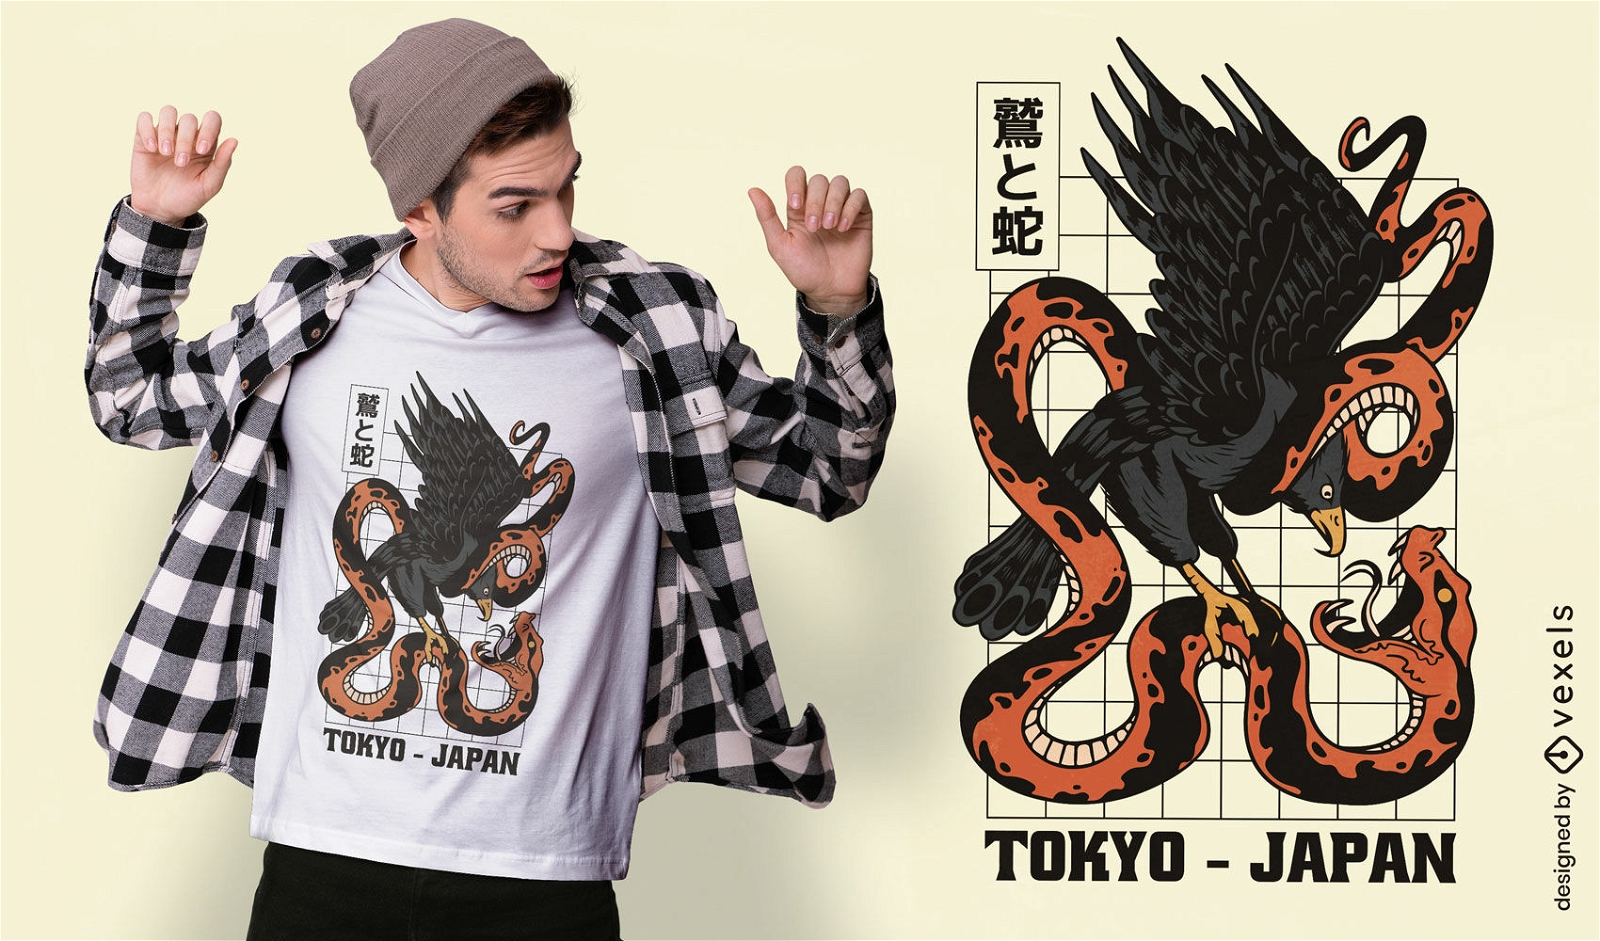 Adler k?mpft gegen ein Schlangen-T-Shirt-Design